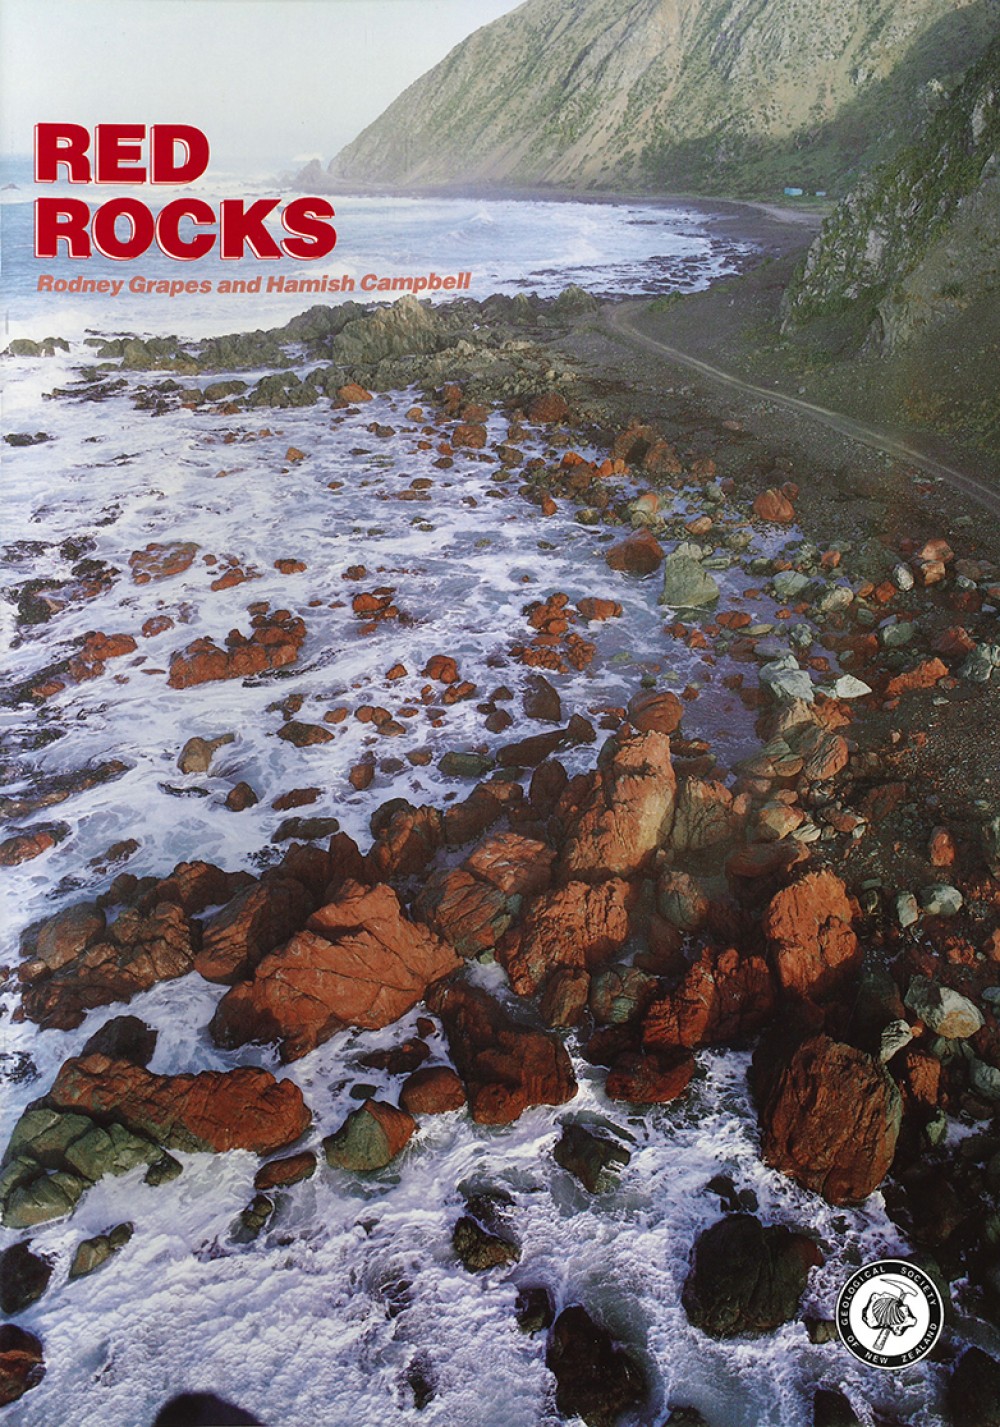 GB11 Red rocks cover image 96dpi